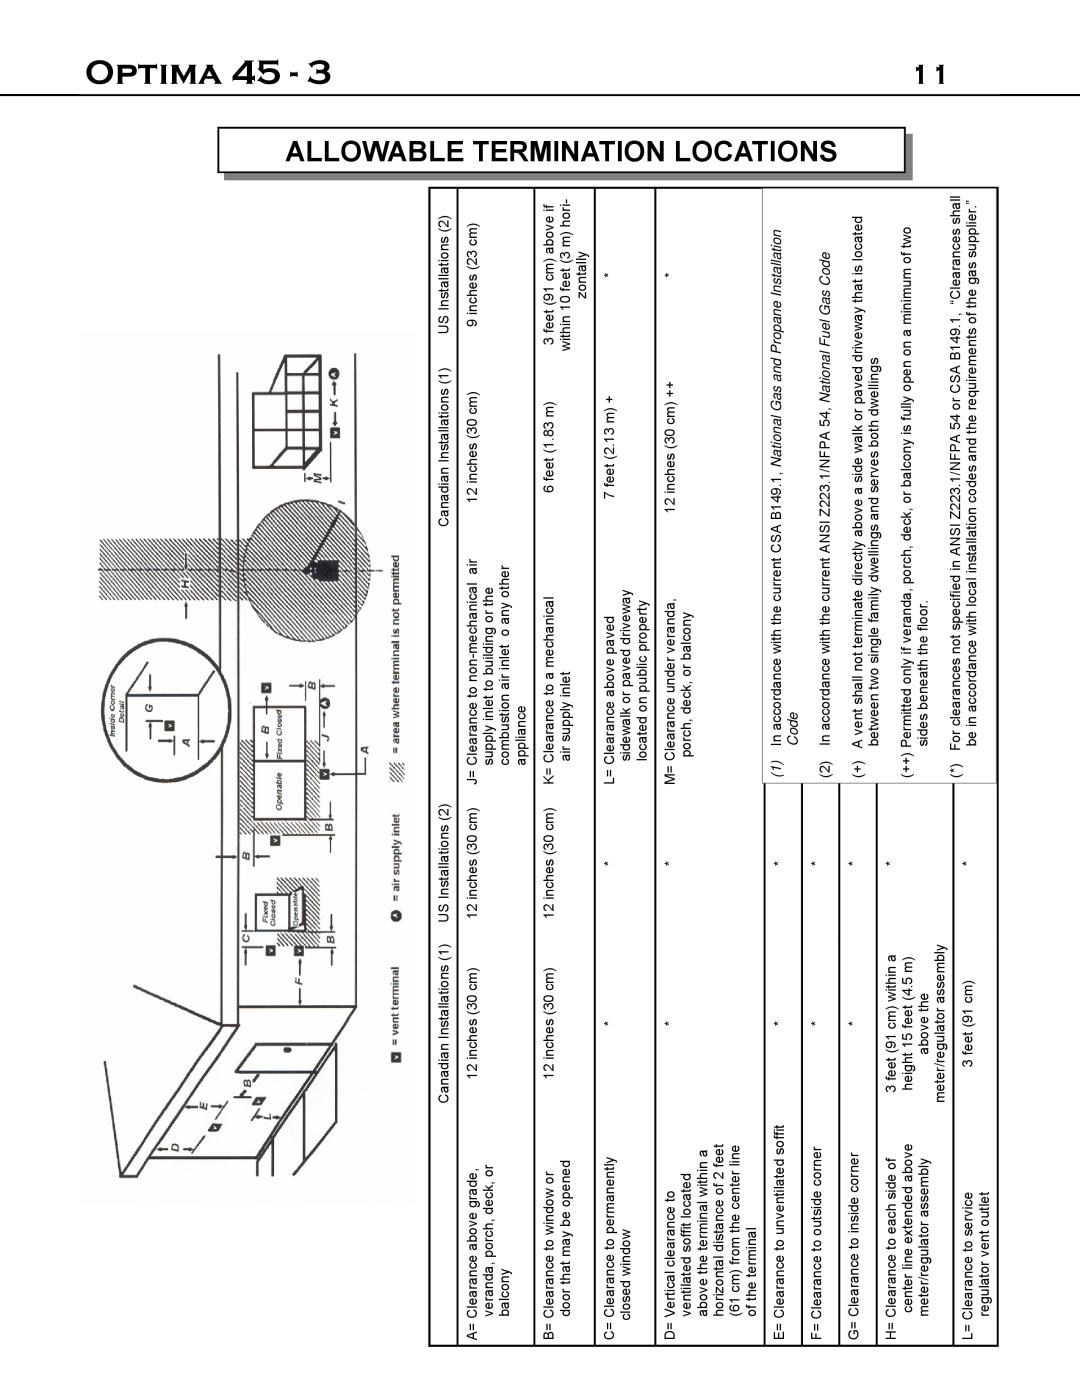 Optima Company 45 - 3 manual Termination Locations, Optima, Allowable, Code 